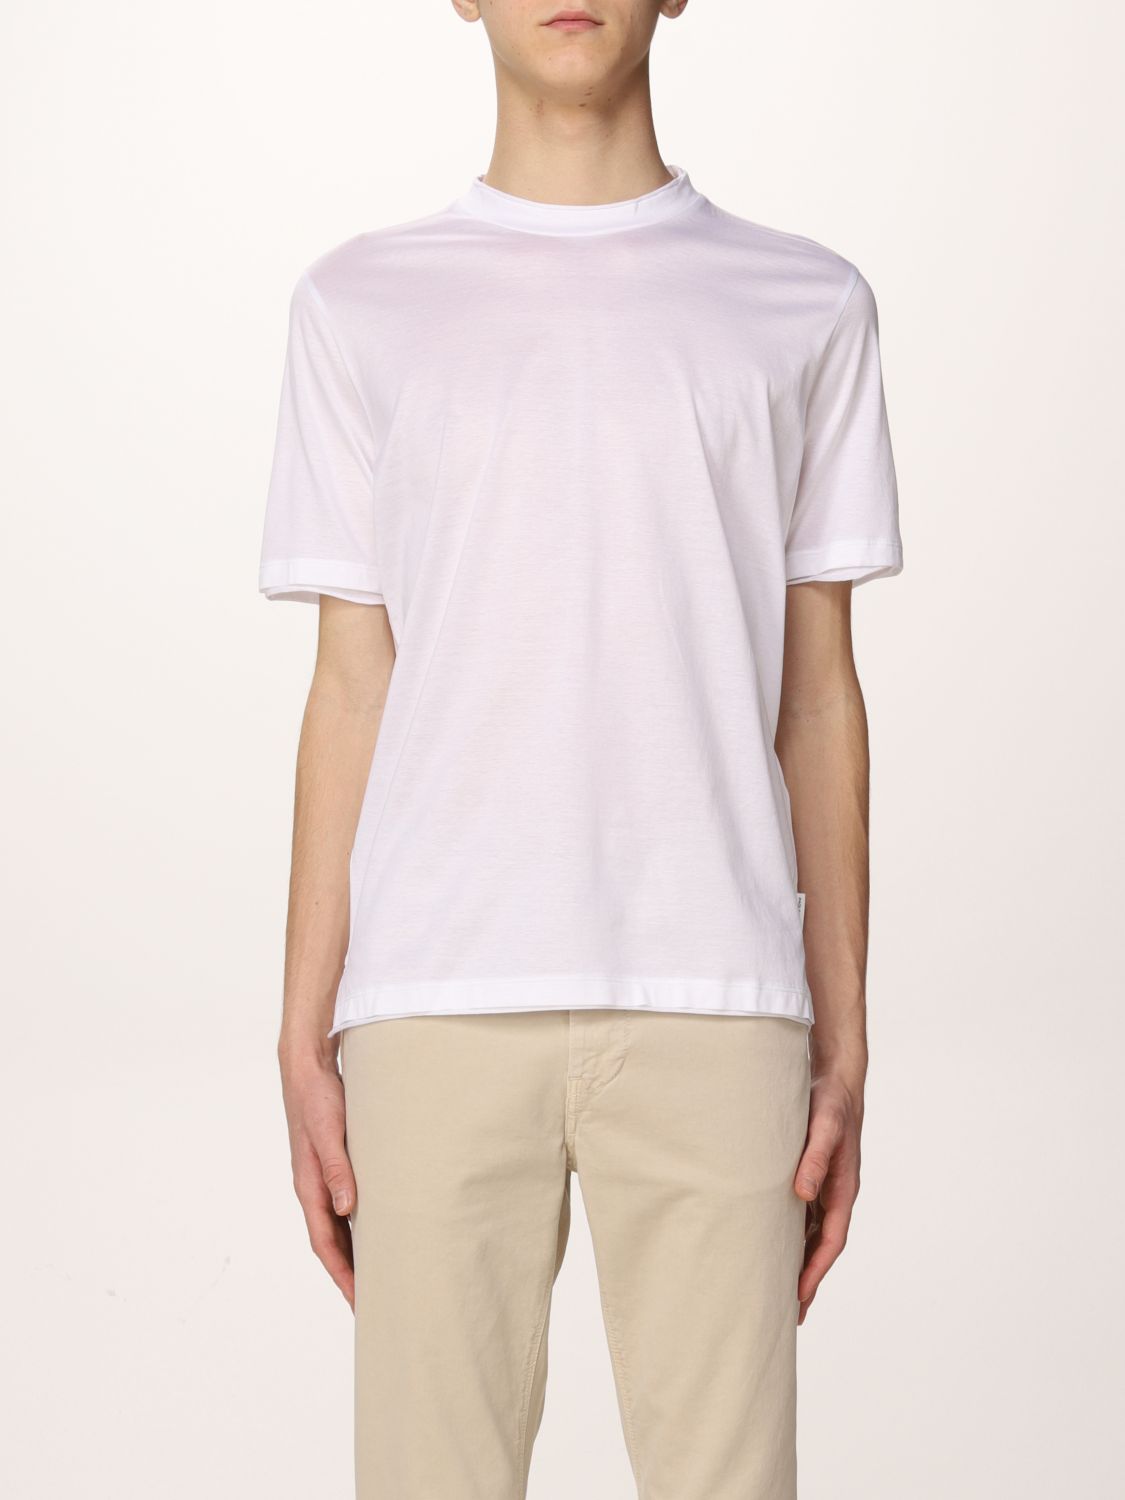 Tシャツ Paolo Pecora: Tシャツ Paolo Pecora メンズ ホワイト 1